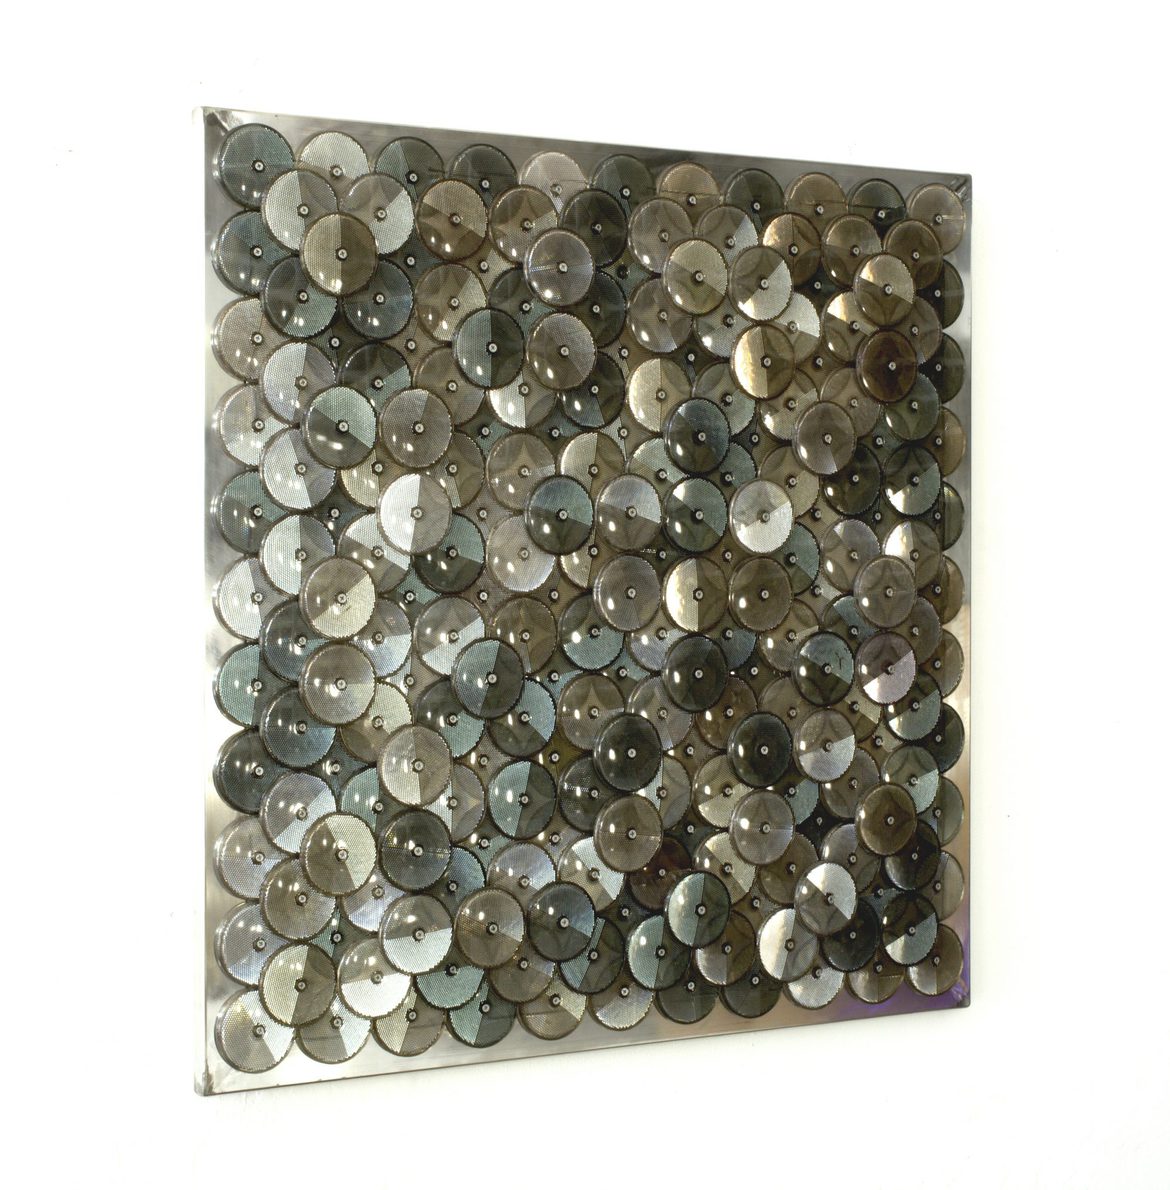 'Dust (dark stone)', 2019, customised corner reflectors, polished aluminium, 97 x 97cm